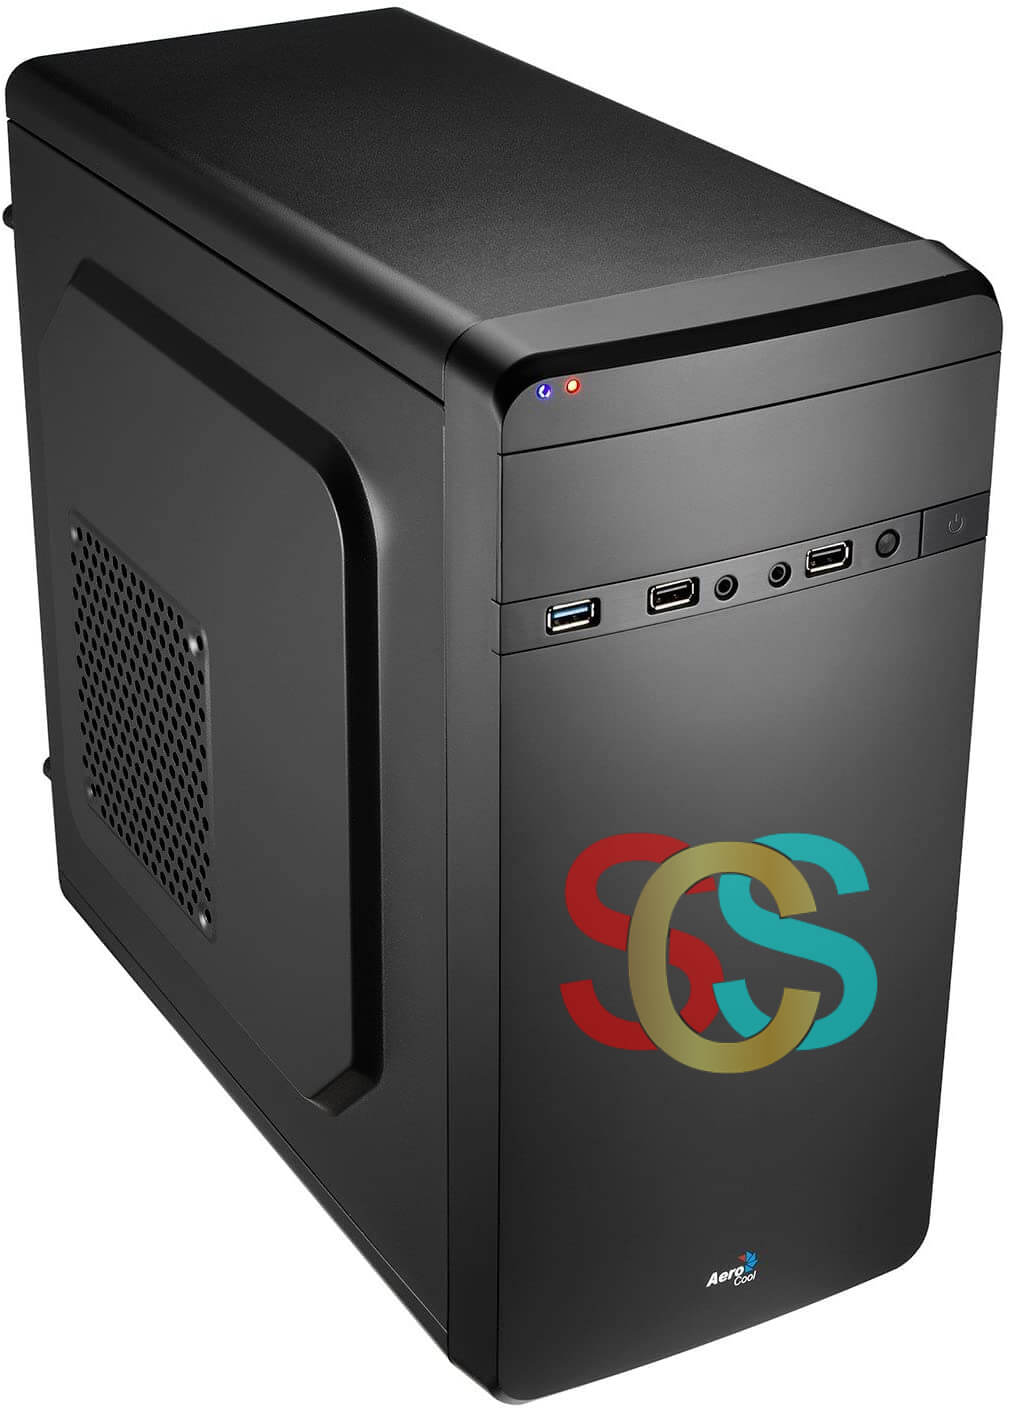 PC Power 180I Mid Tower Black Desktop Case with Standard PSU